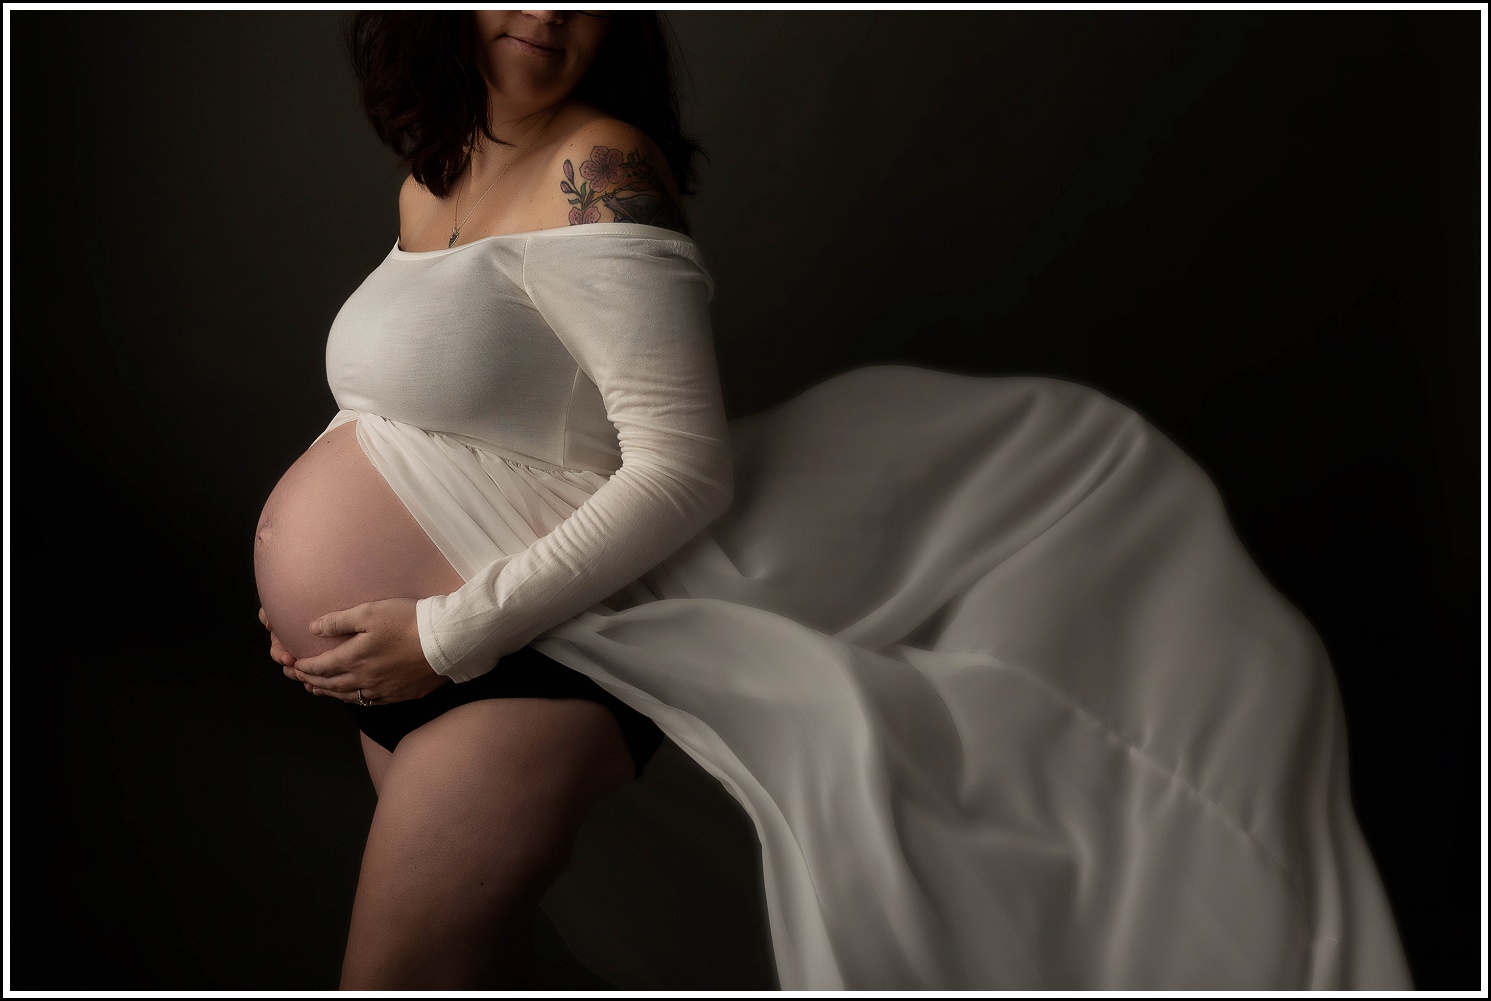 Chelsea’s Baby Belly | Kingston photographer